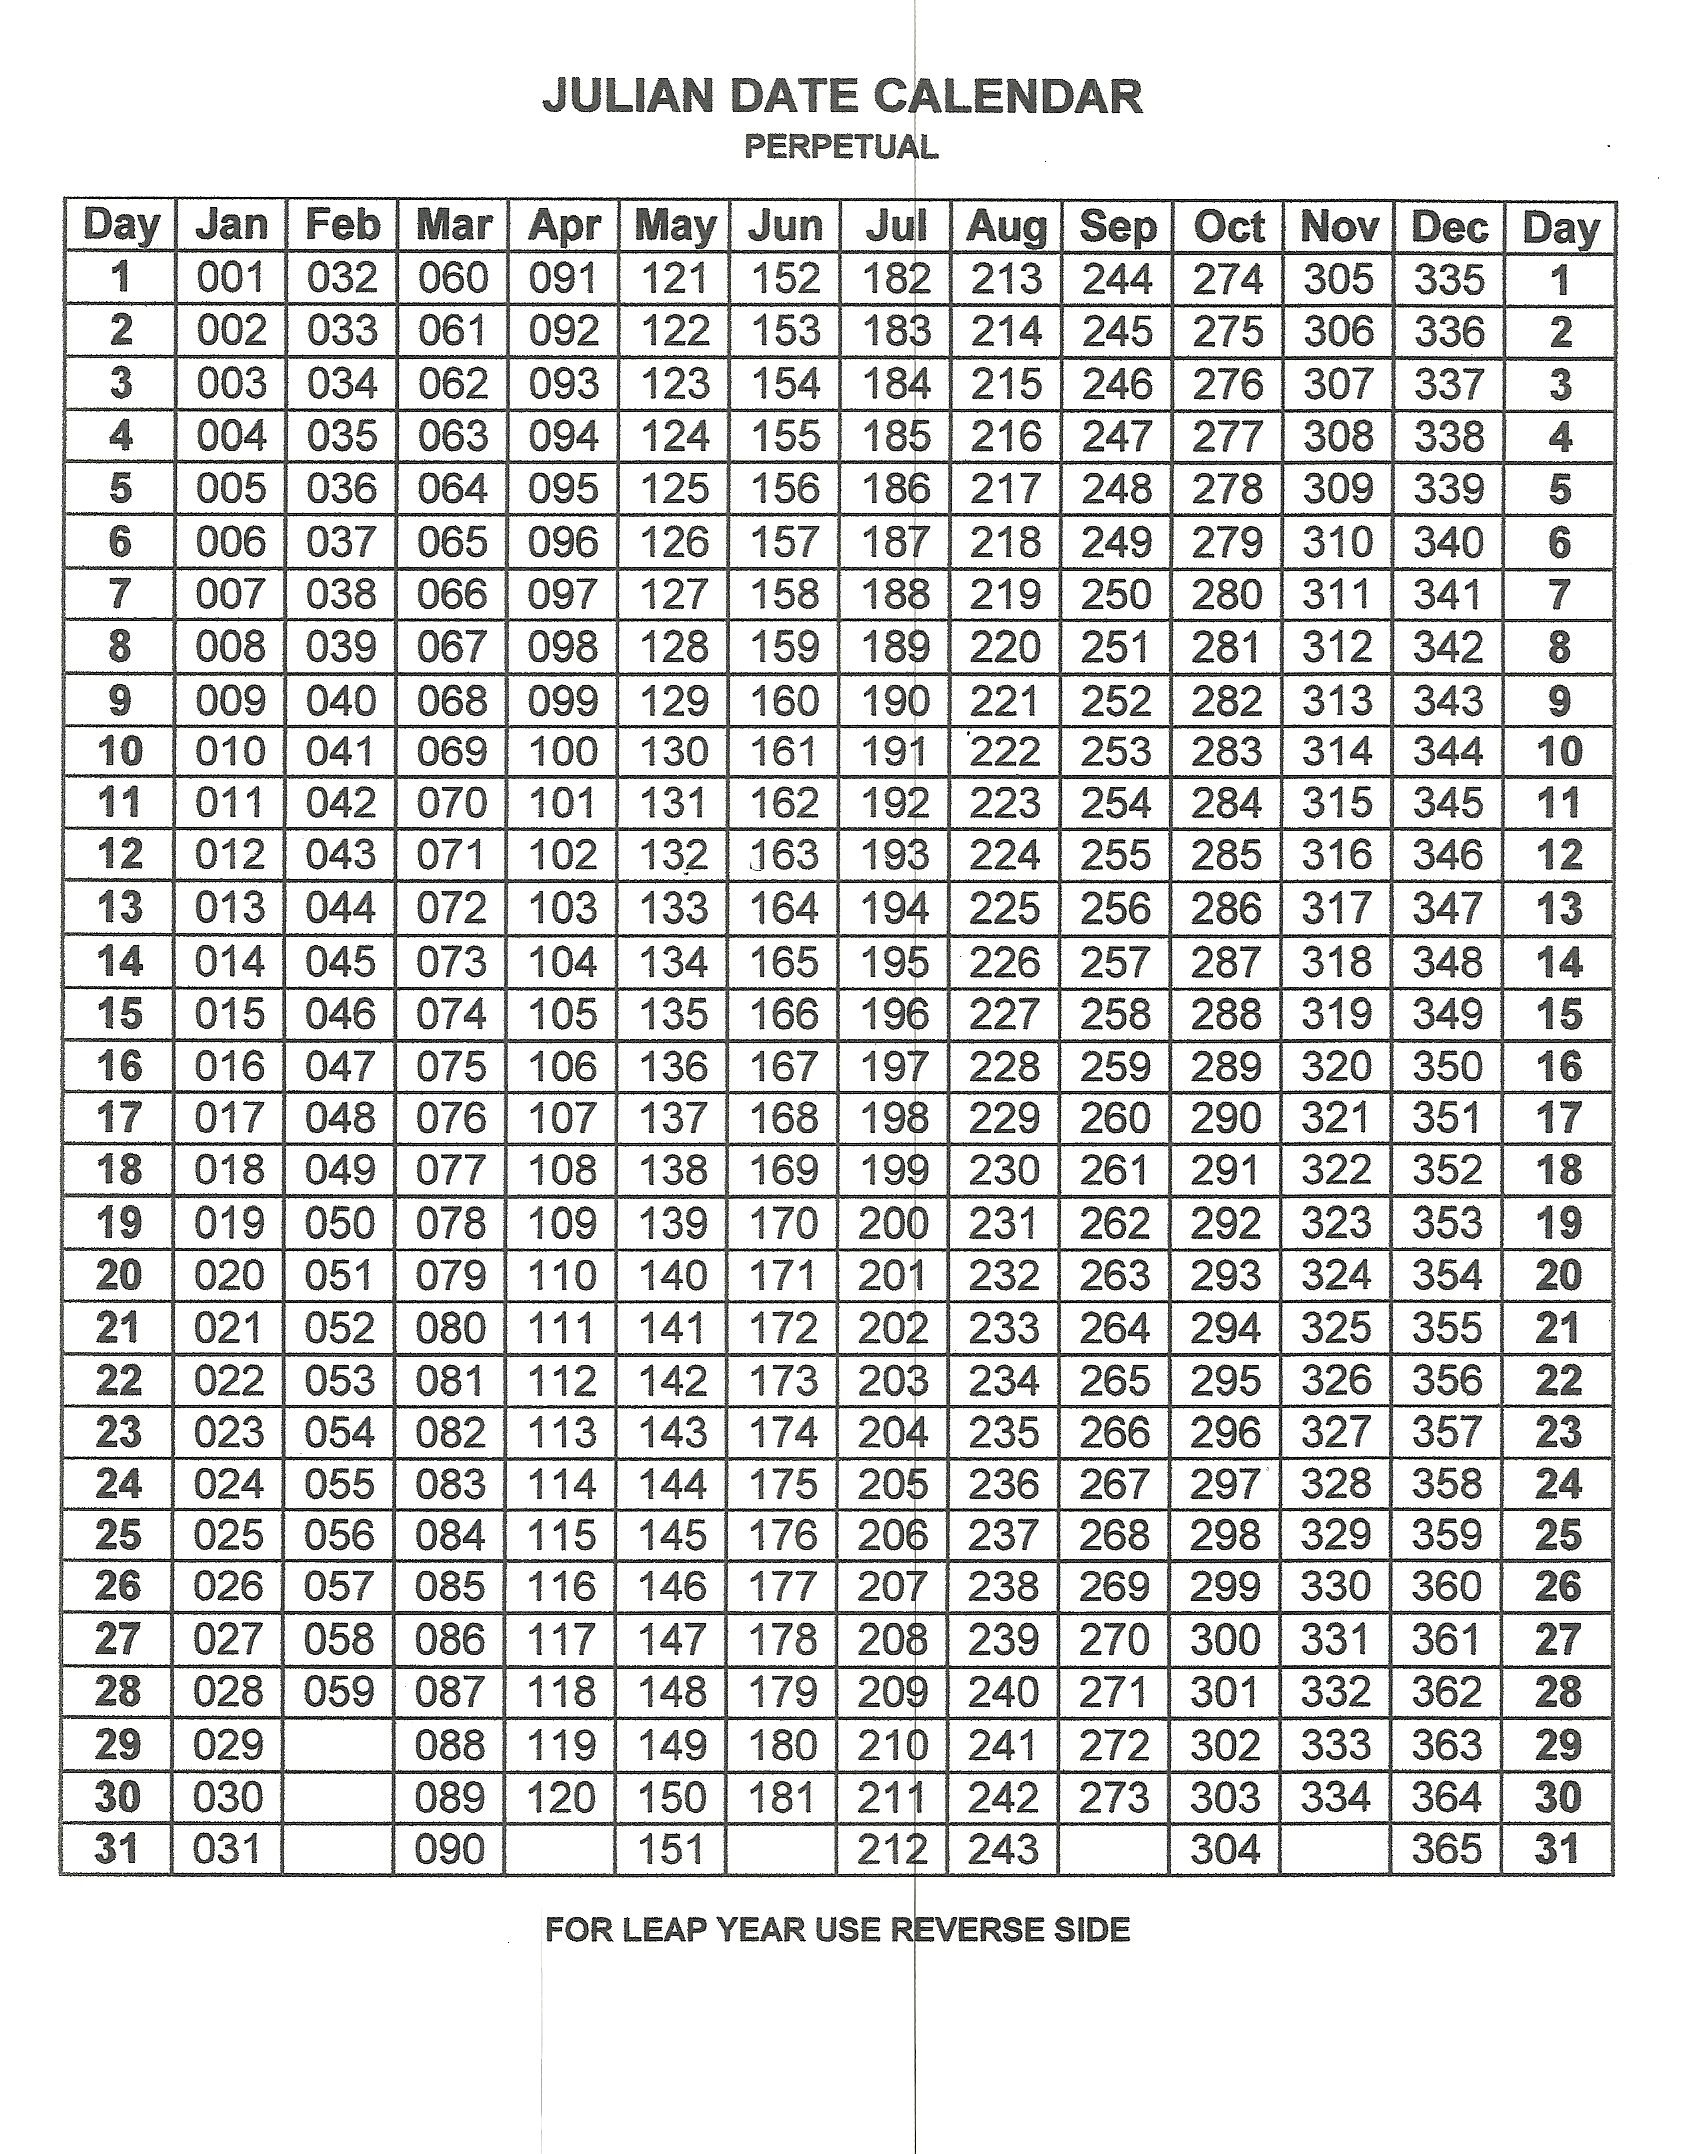 Perpetual Julian Date Calendar | Julian Dates, Calendar Julian Date Calendar 2021